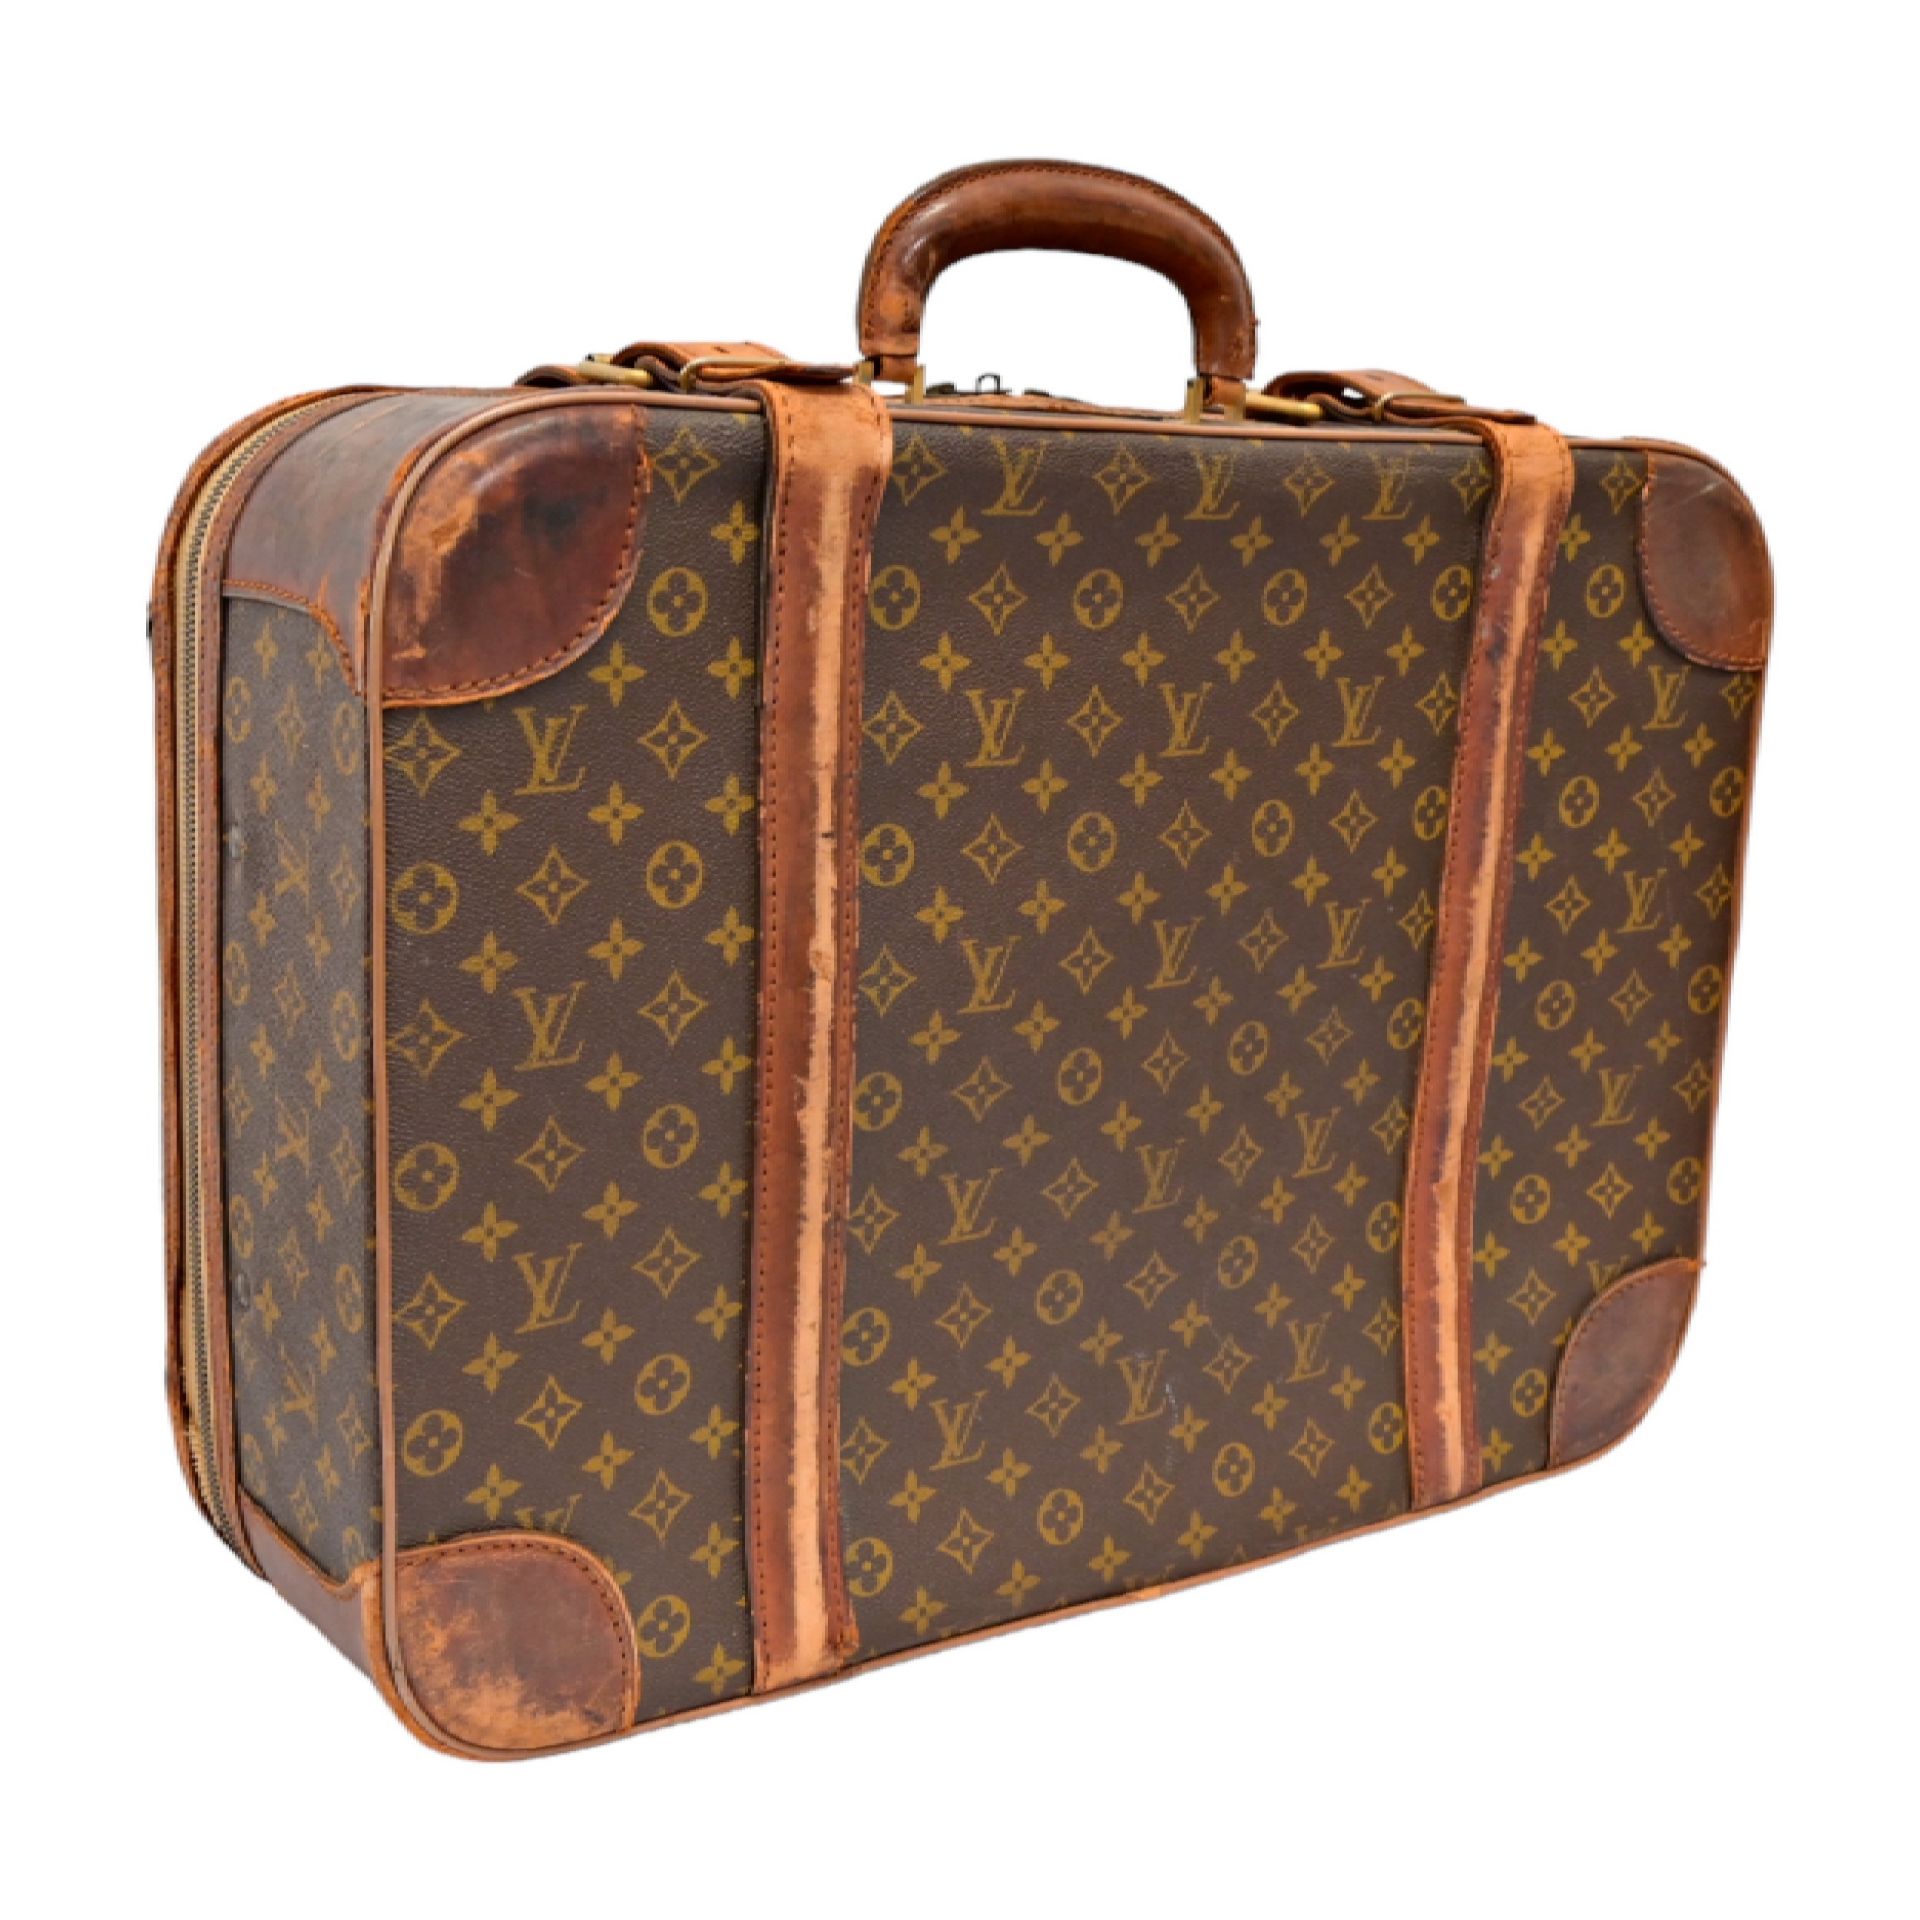 Vintage Louis Vuitton Soft Sided Suitcase, 20th century.